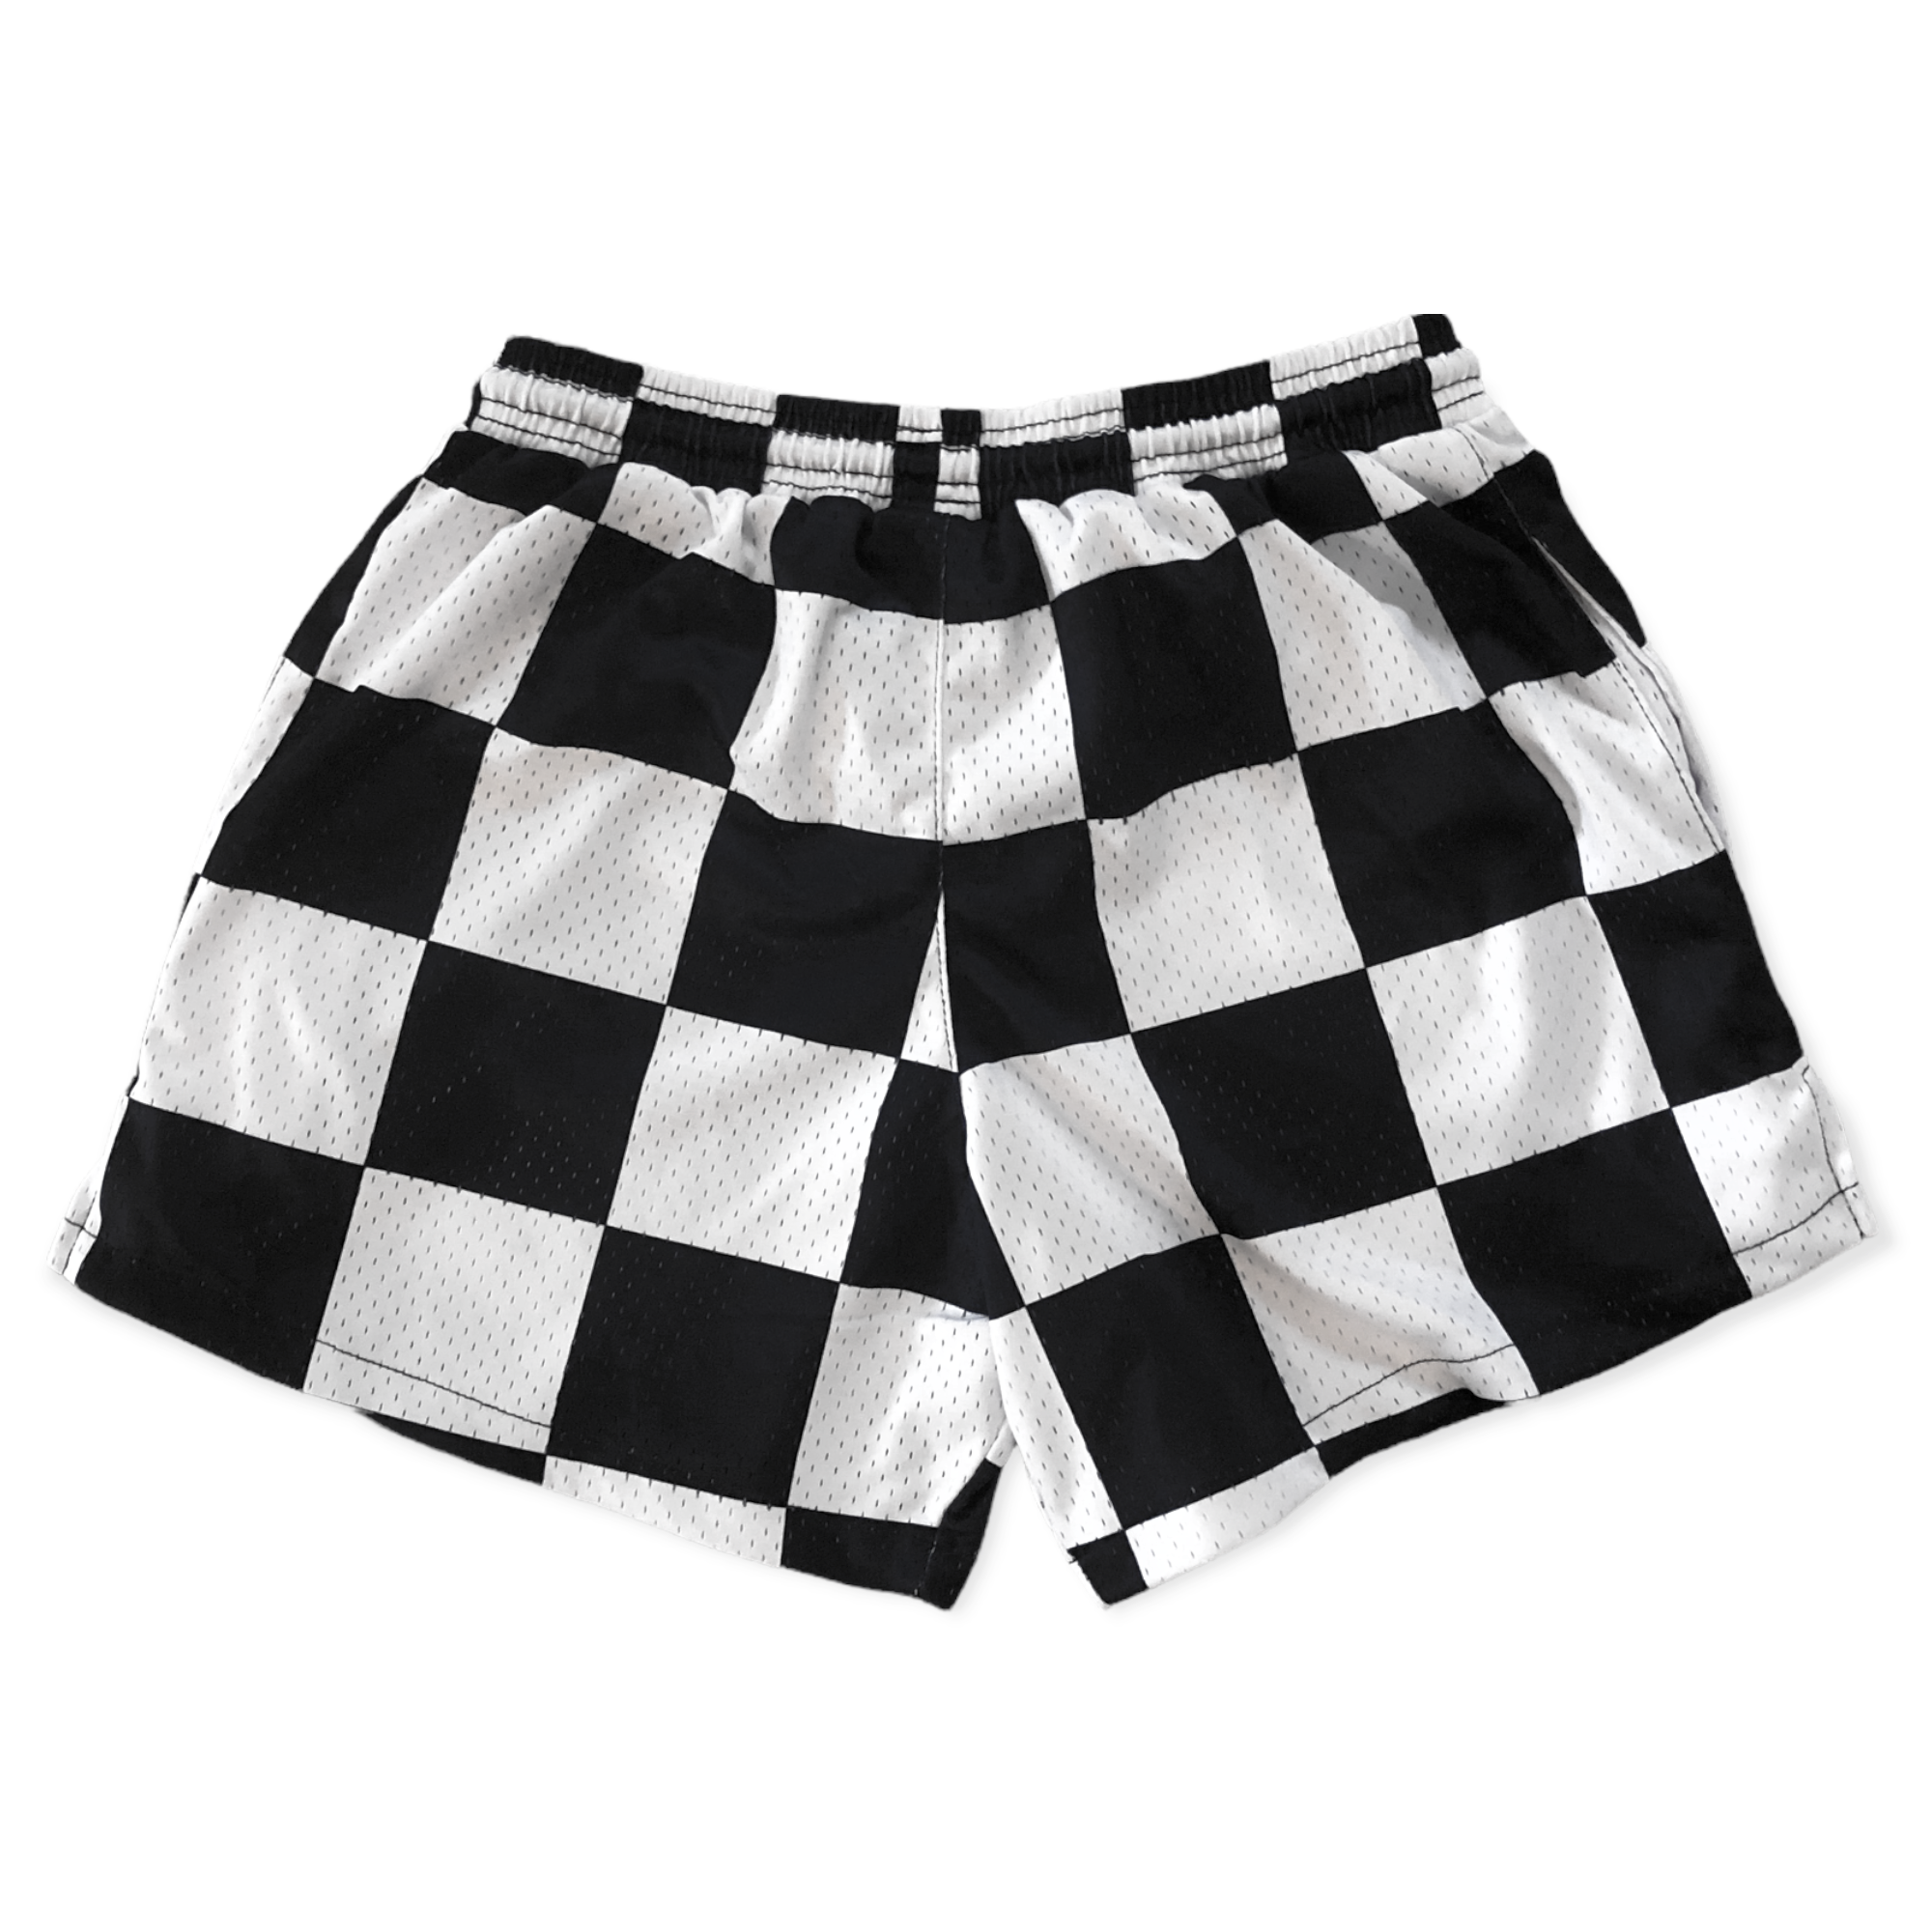 DKS "Checkerboard" Mesh Shorts